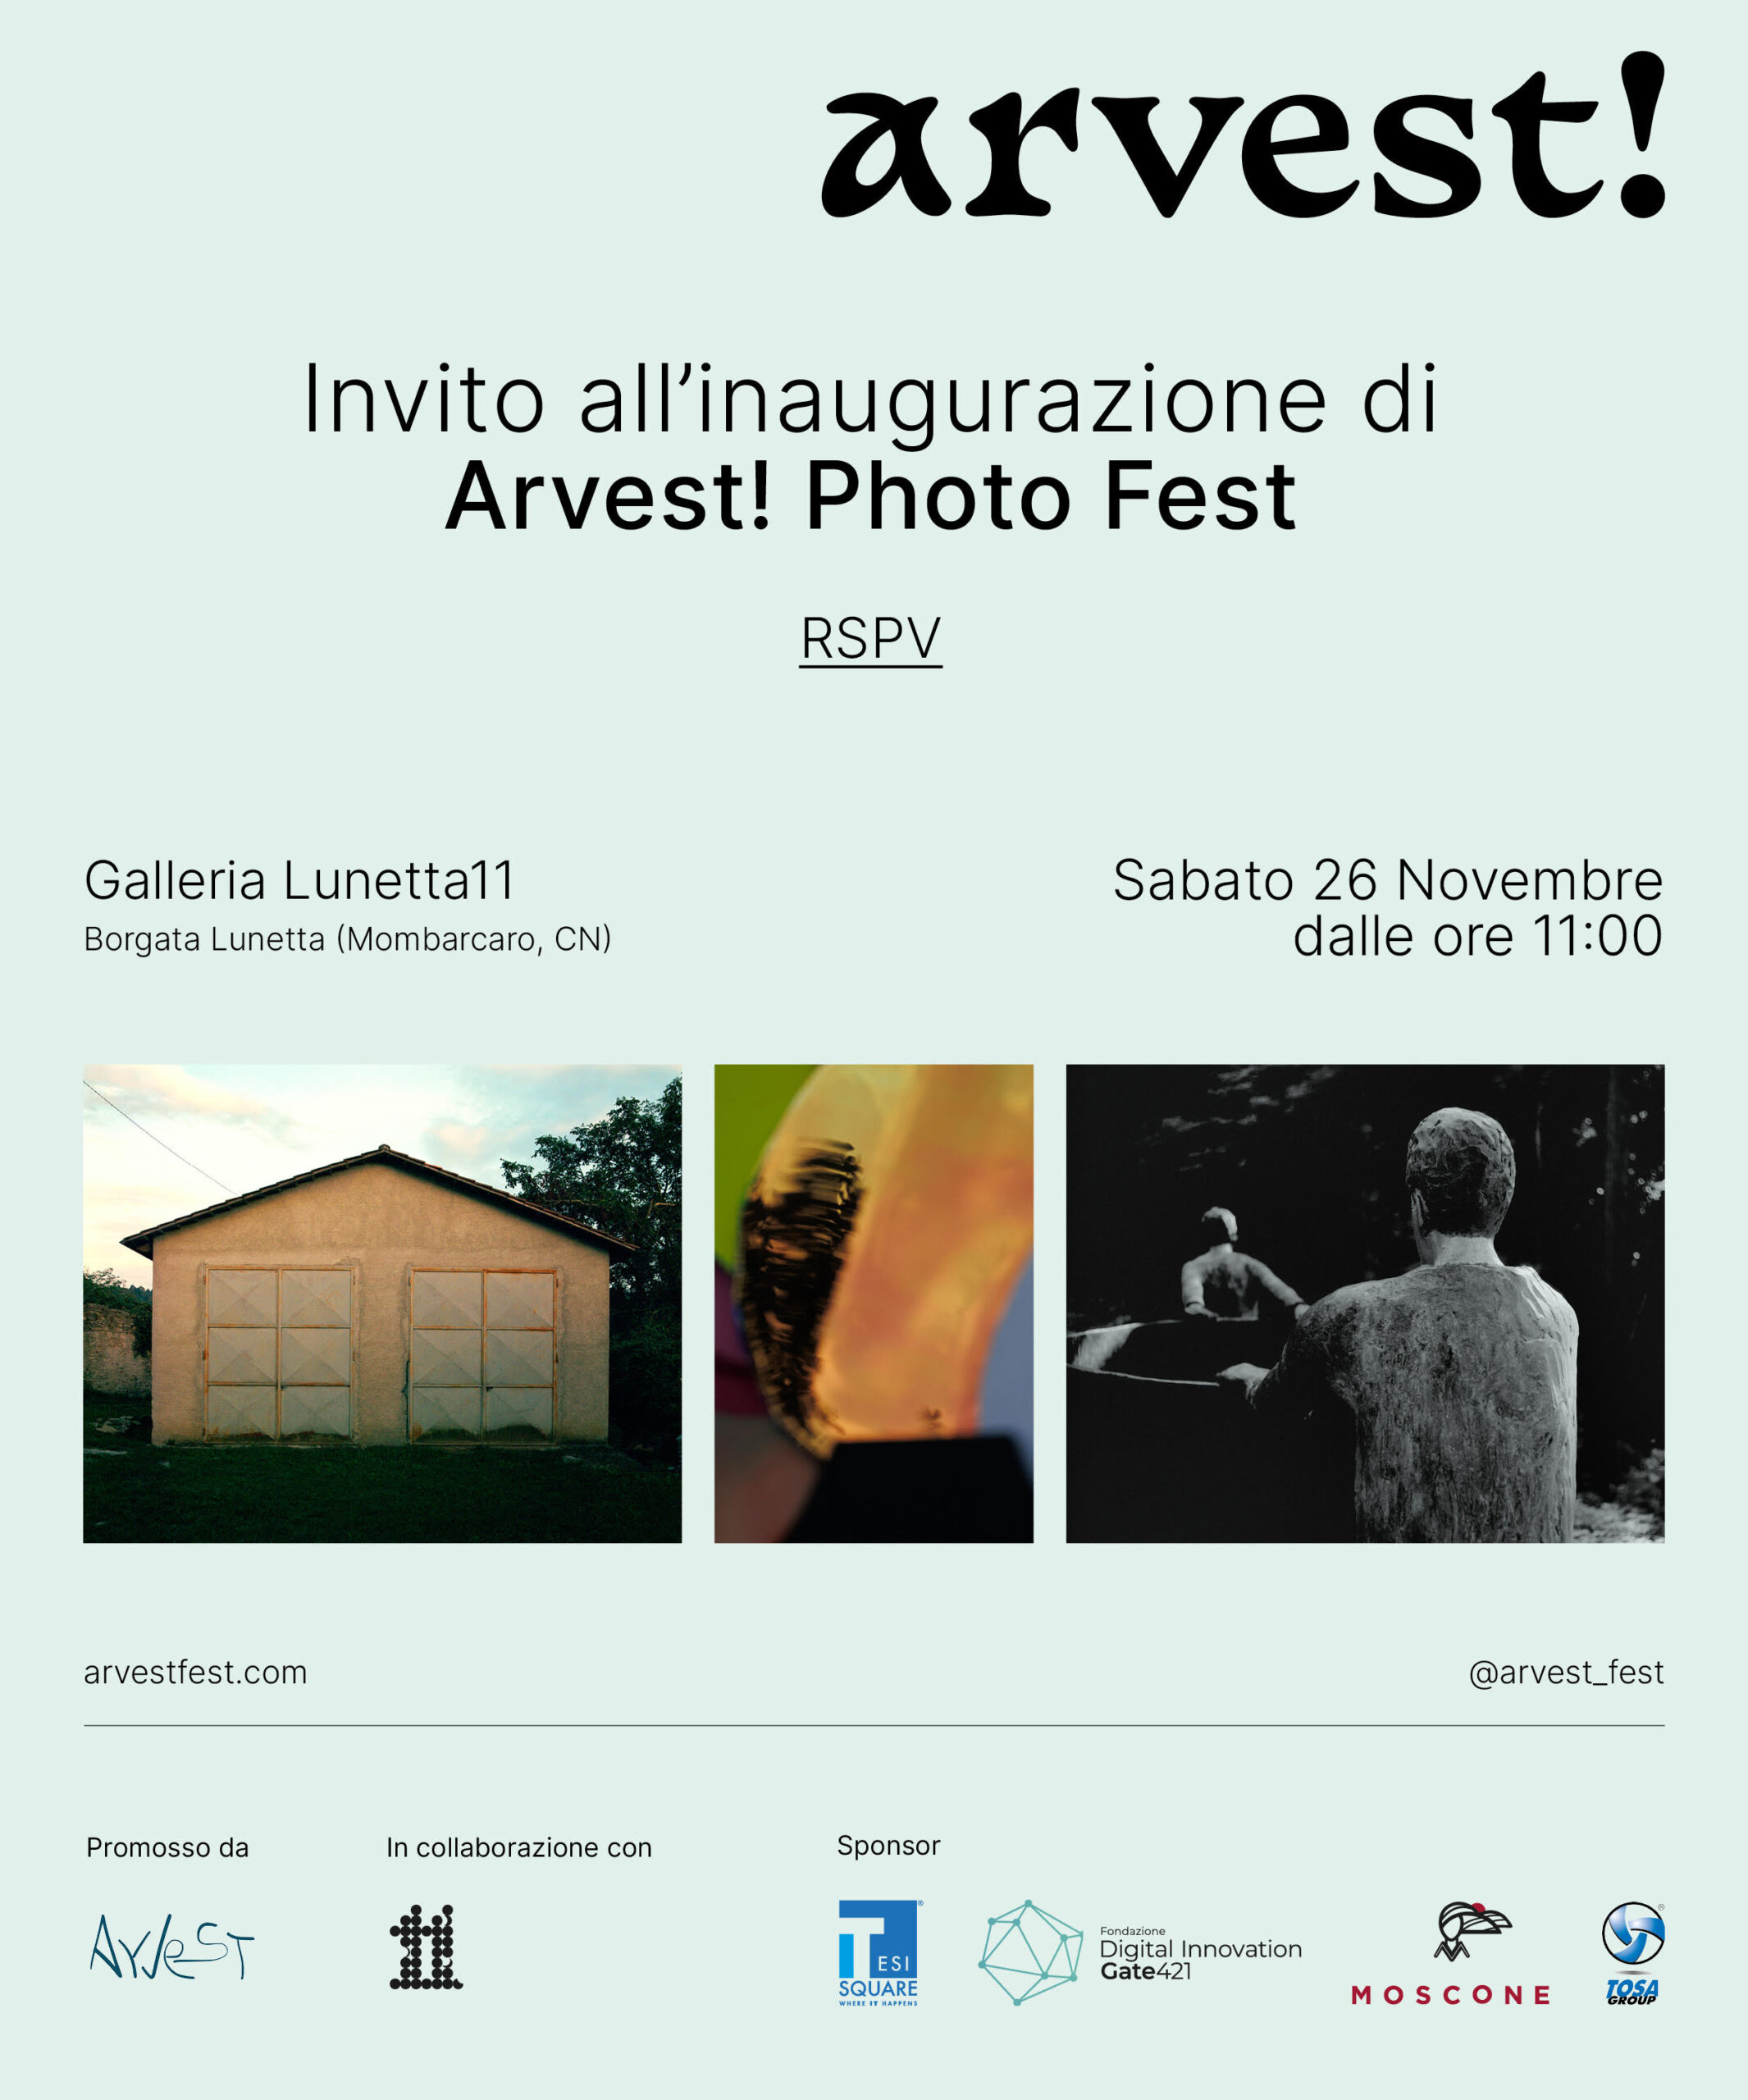 Arvest! Photo Fest 2022